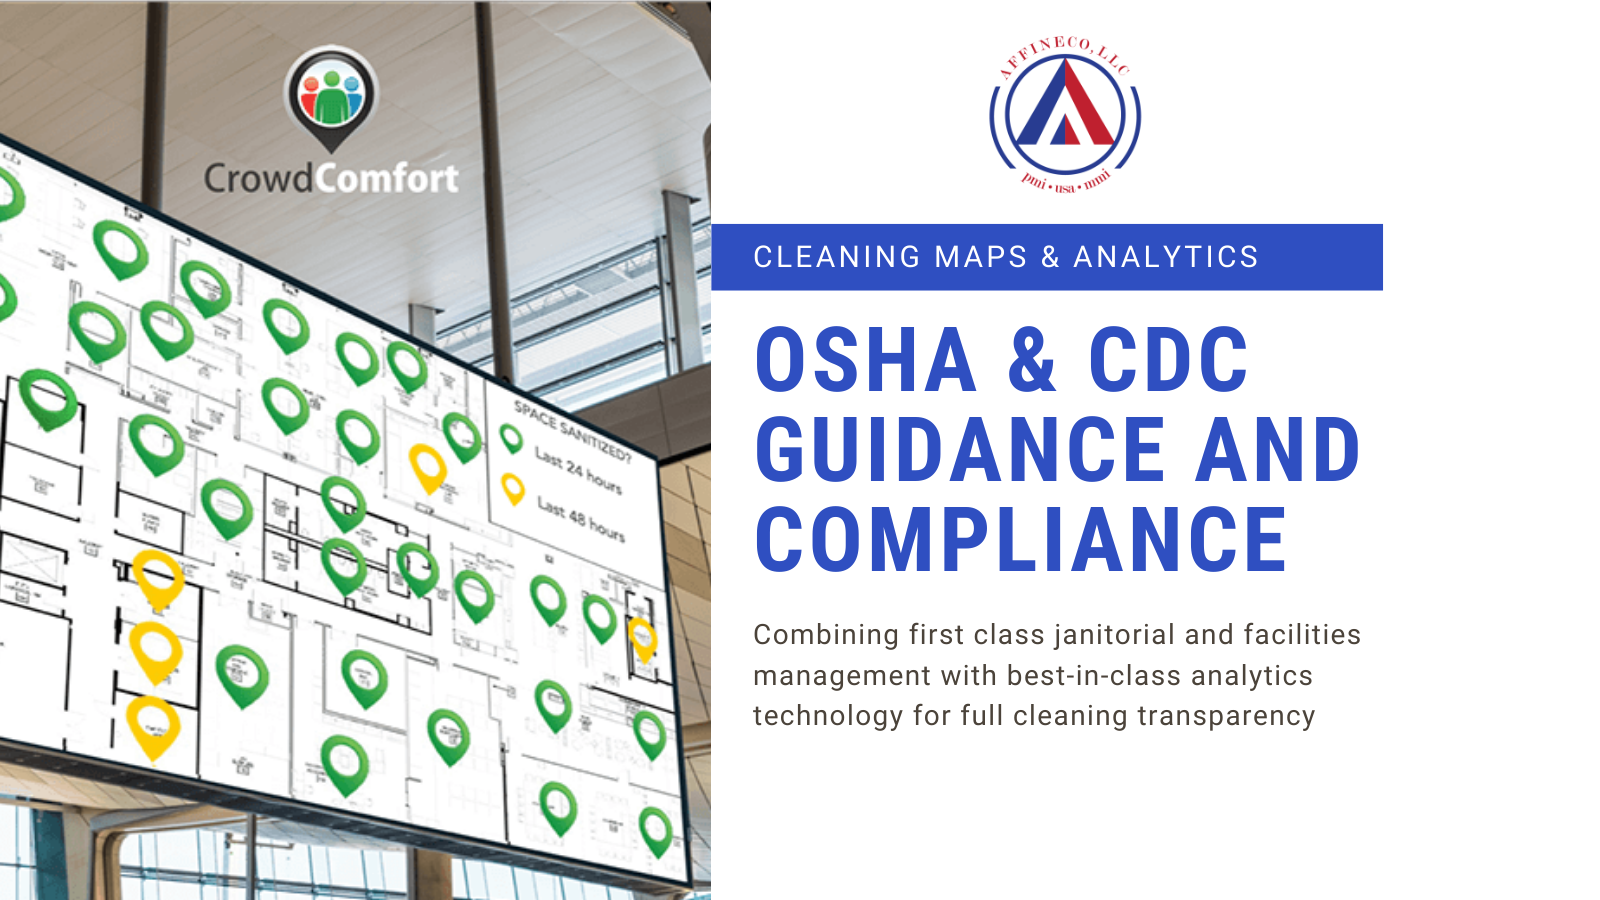 Affineco OSHA & CDC Compliance